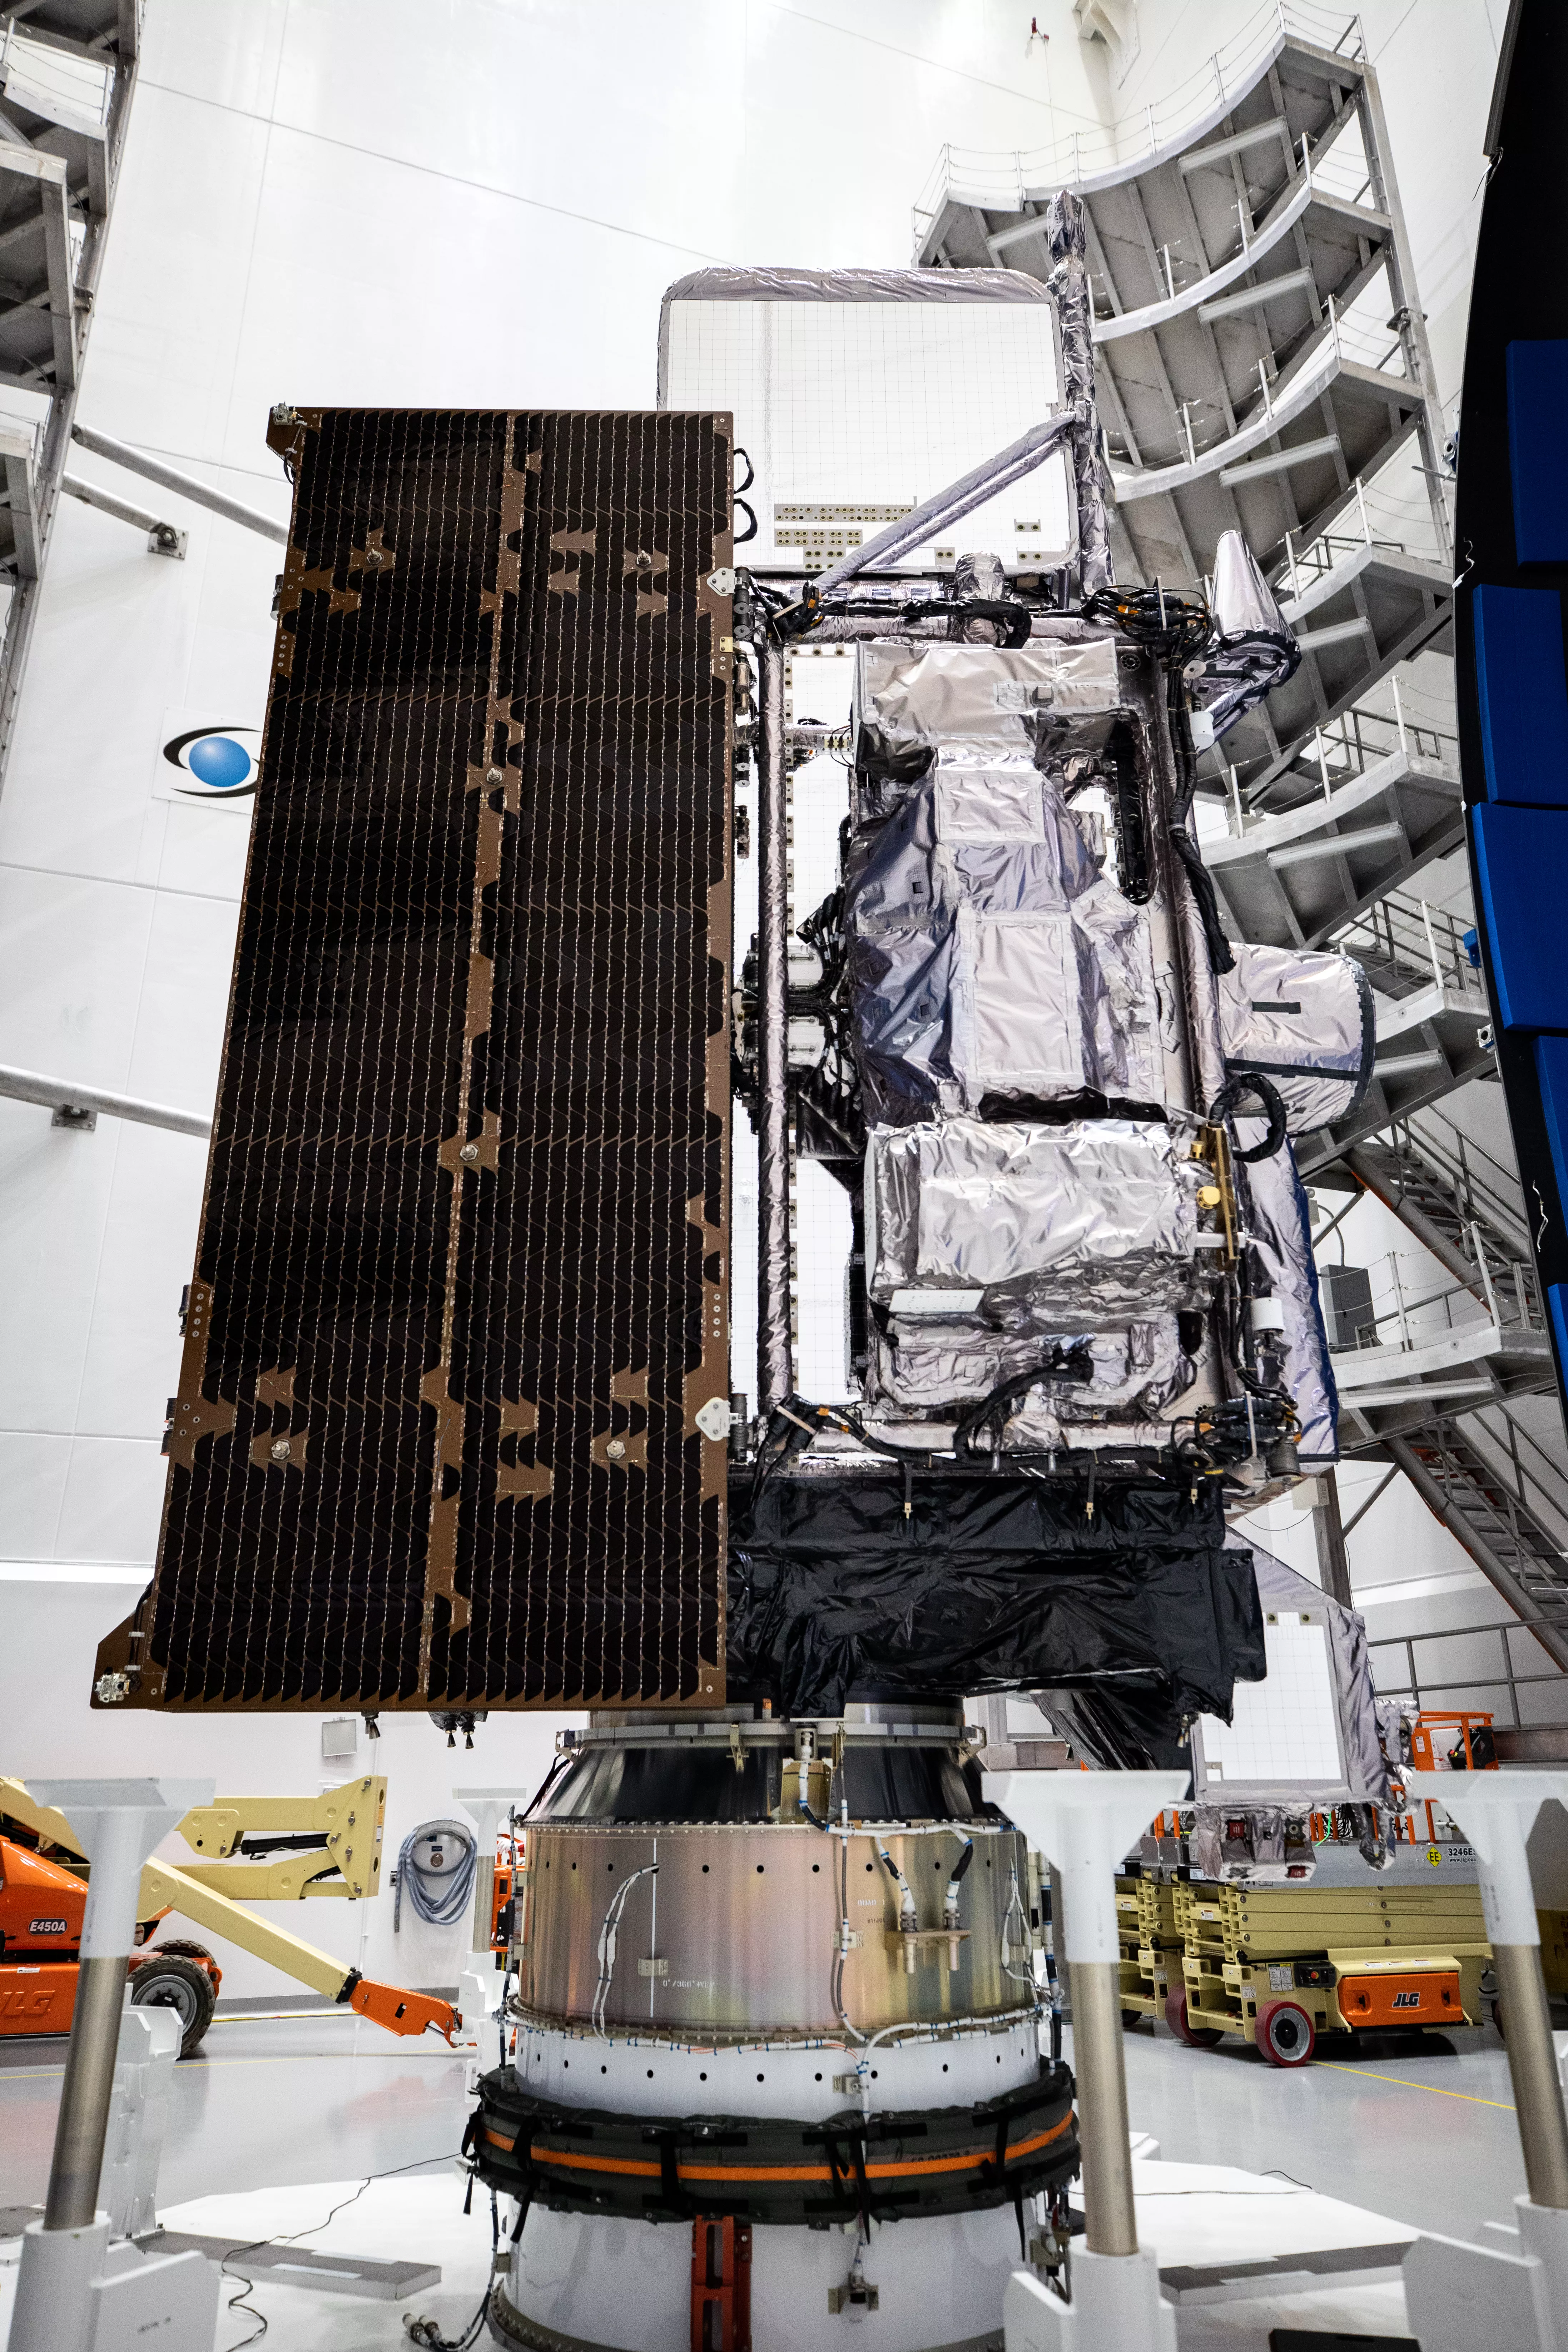 GOES-T satellite Preparing for Encapsulation